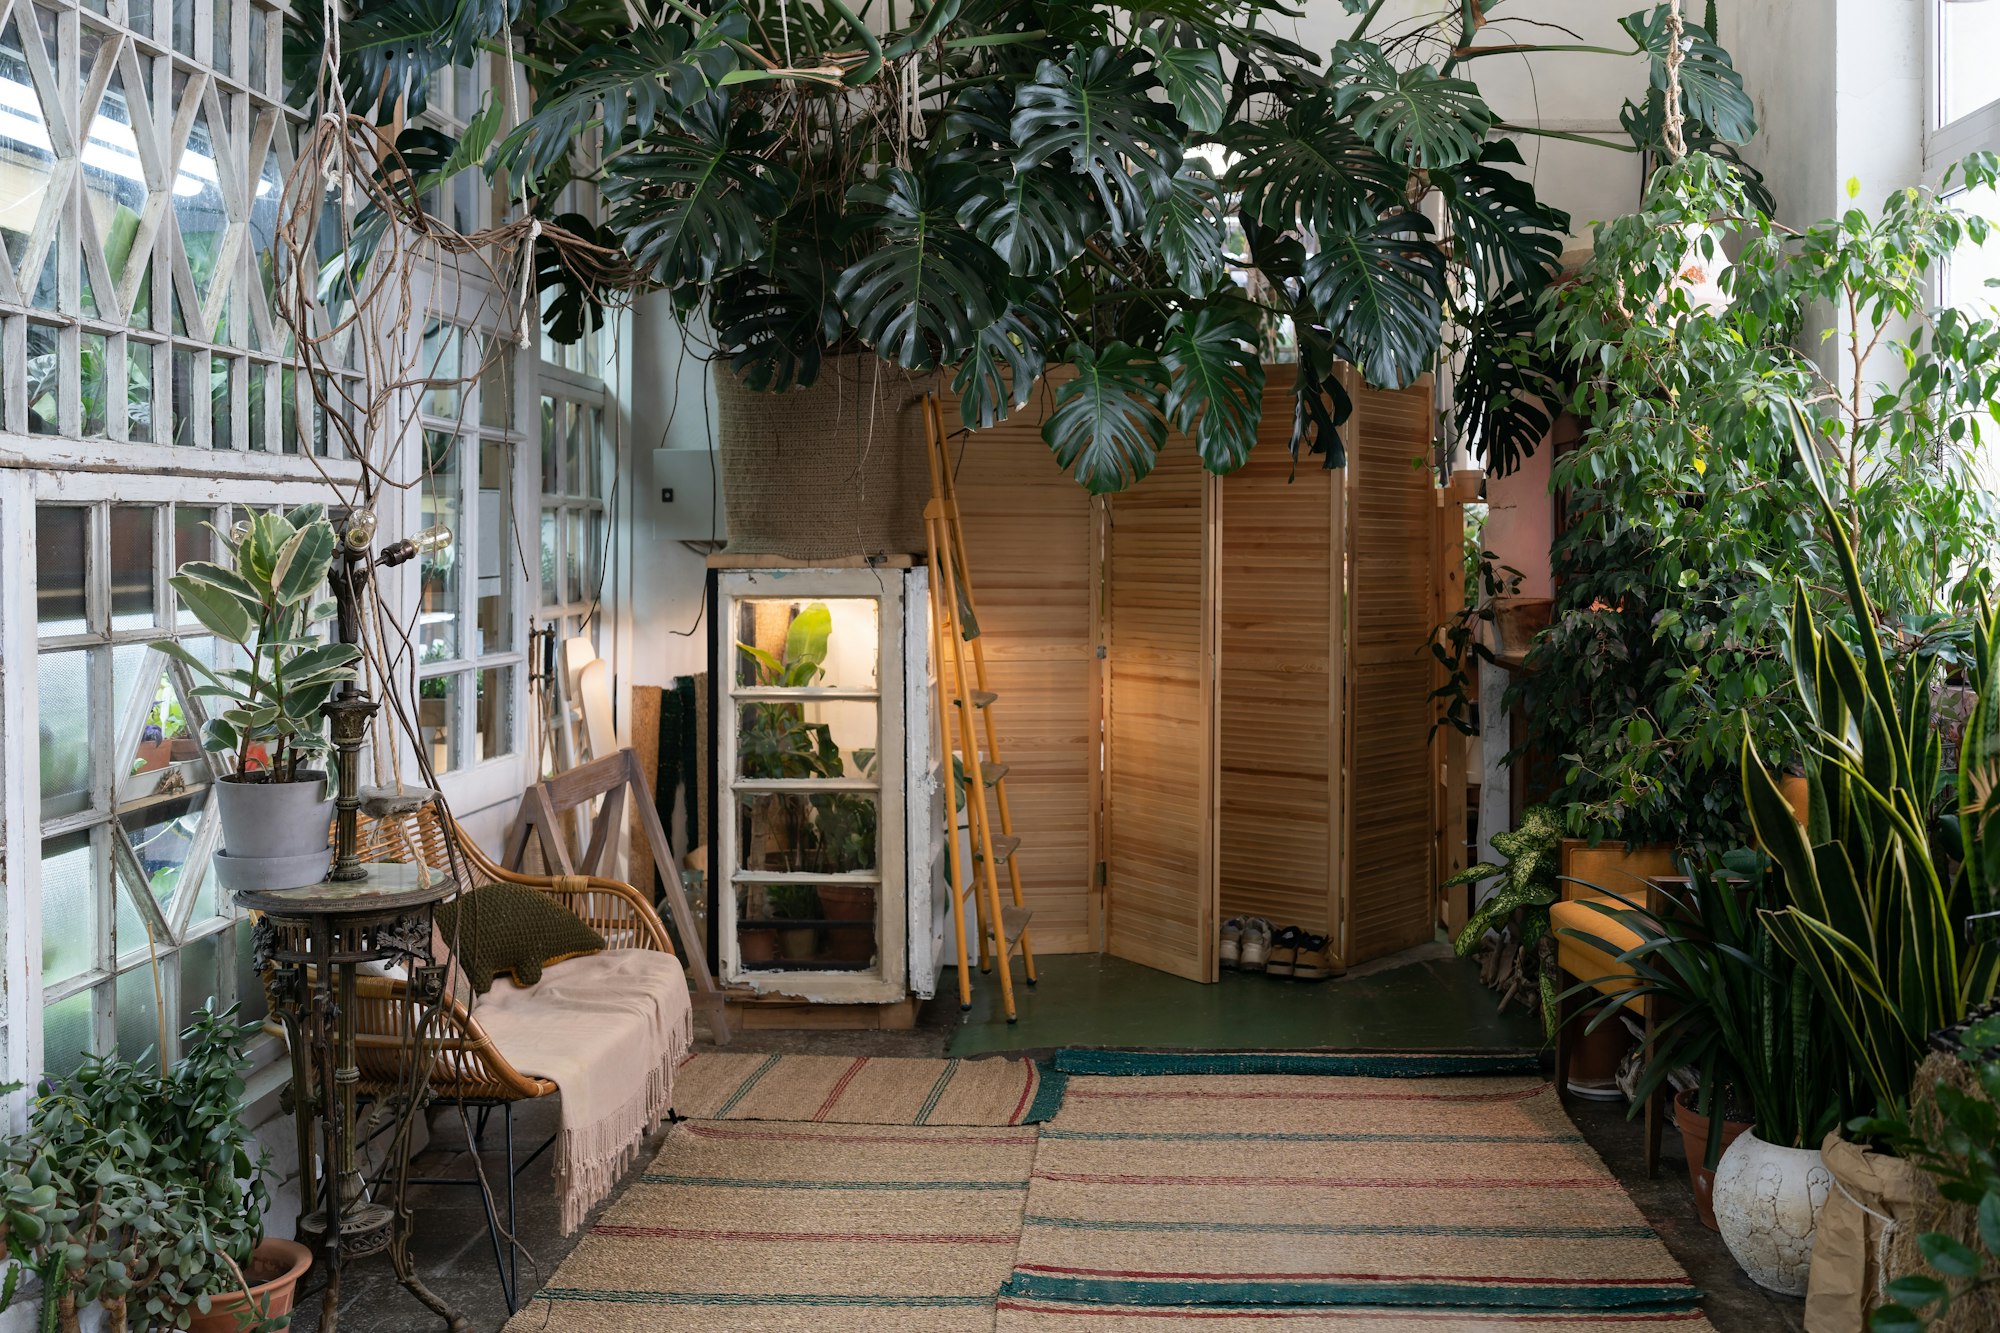 Cozy eco-home with indoor greenhouse, eco-friendly interior design, stunning urban jungle room